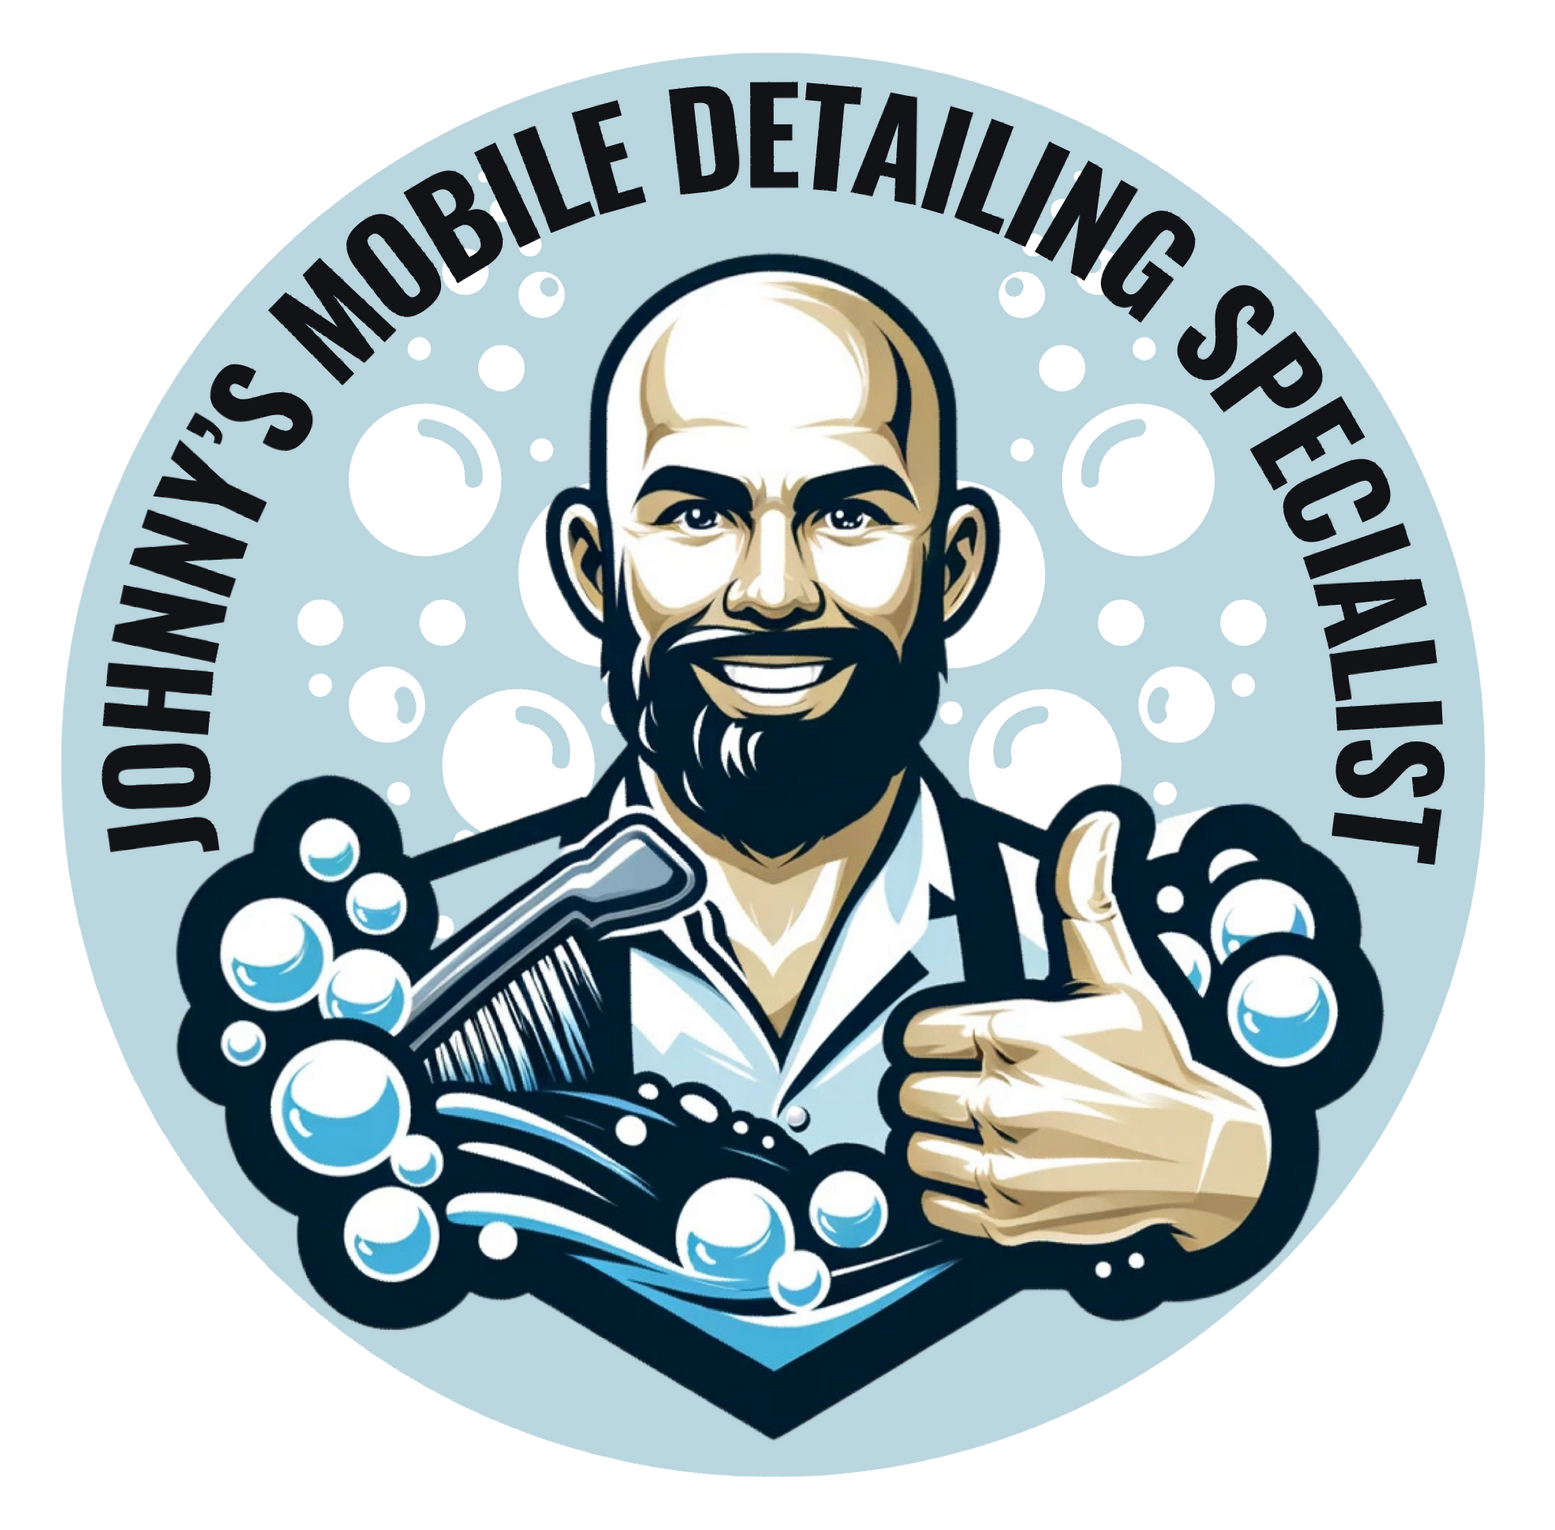 Johnny's Mobile Detailing Specialist logo